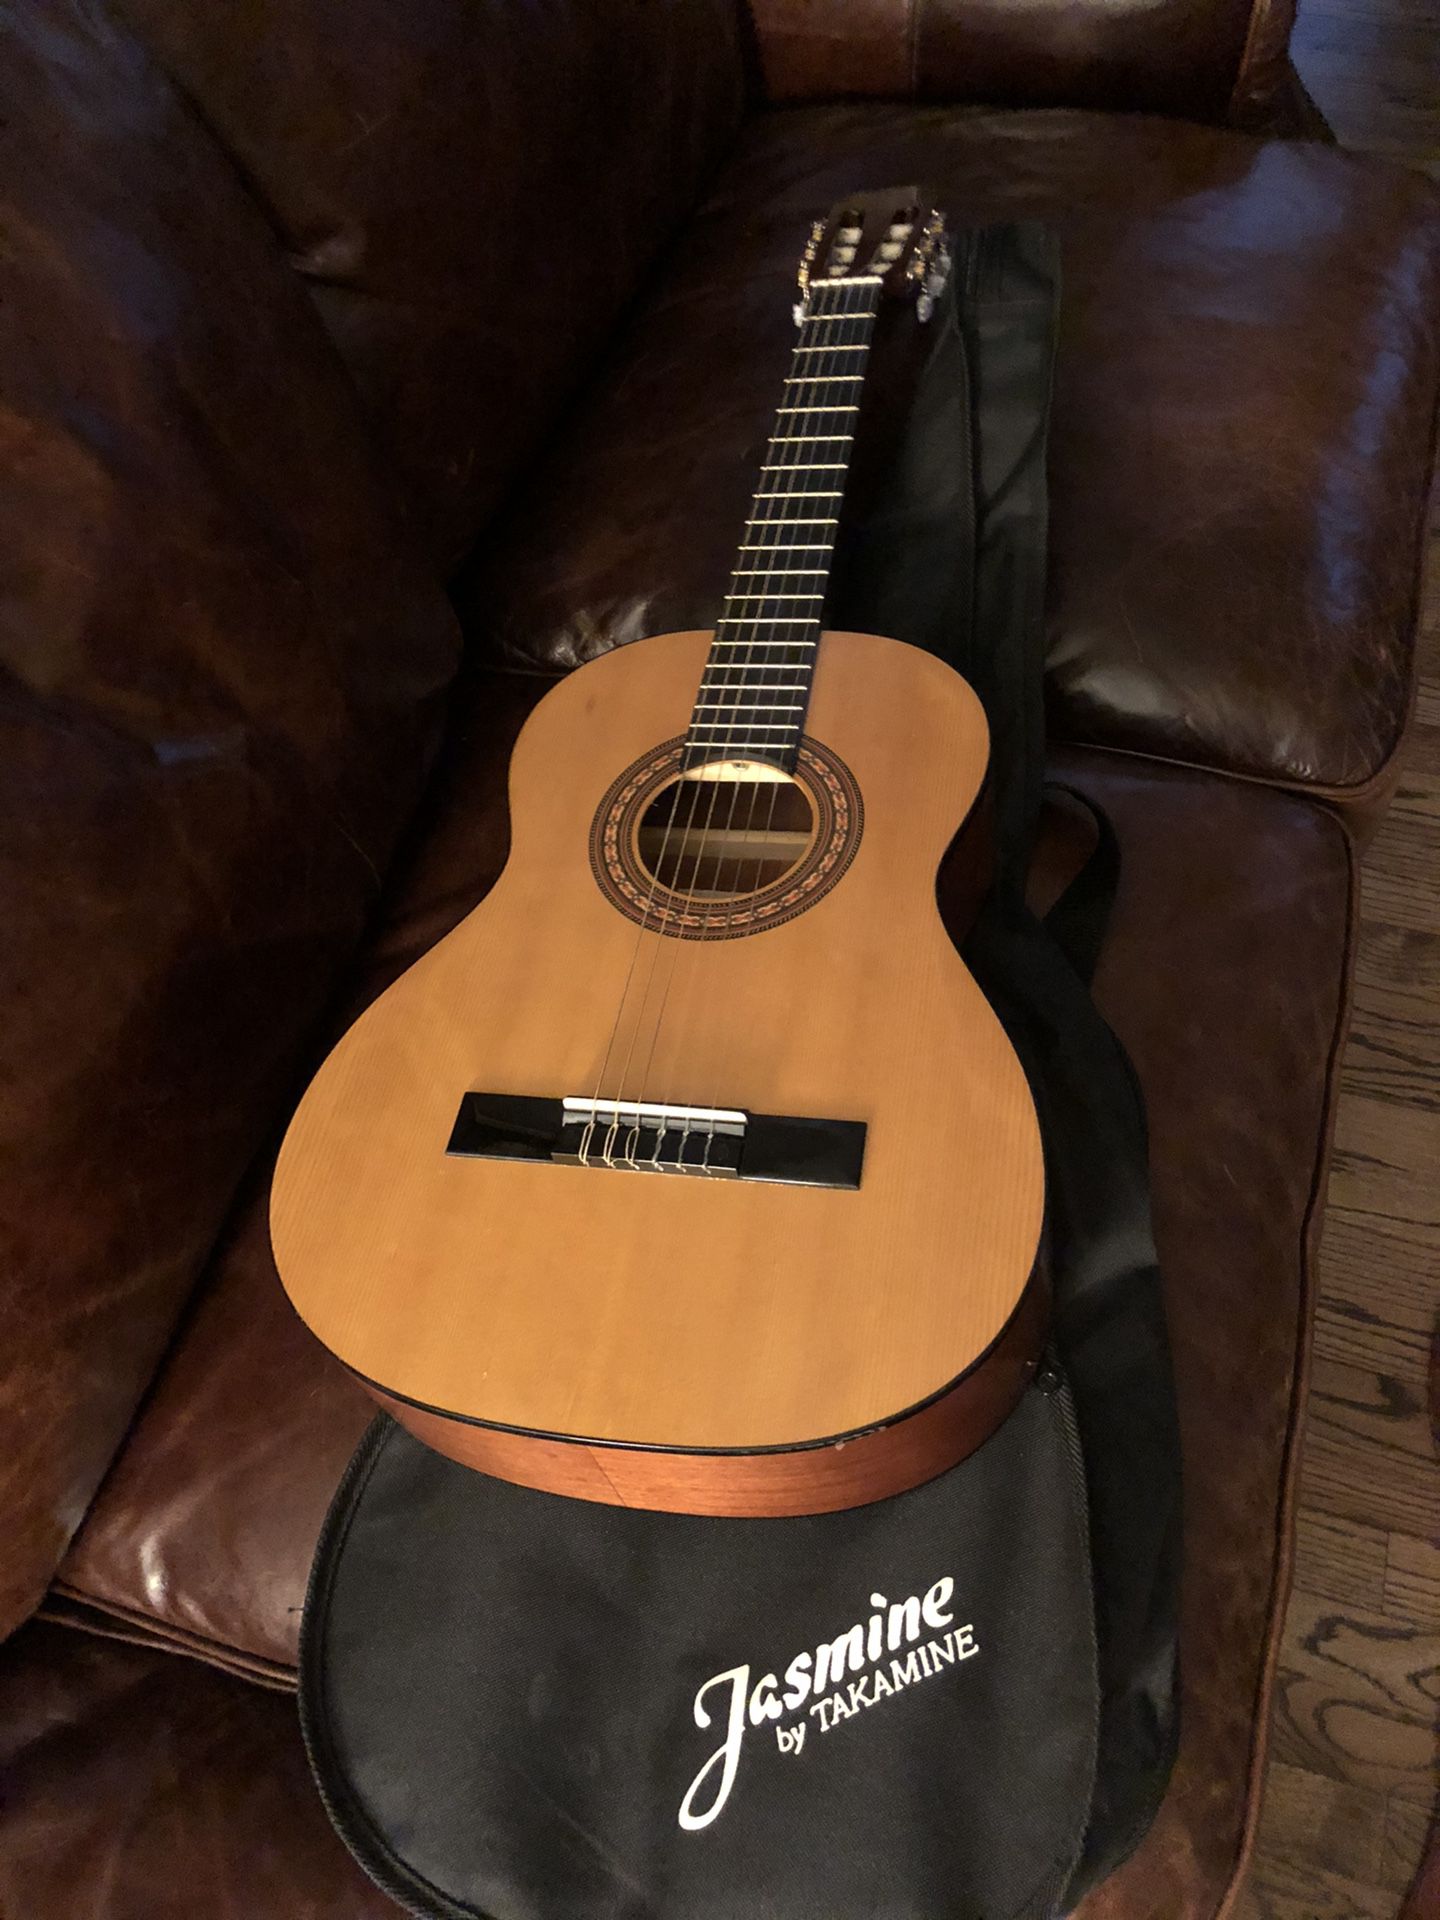 Jasmine acoustic guitar